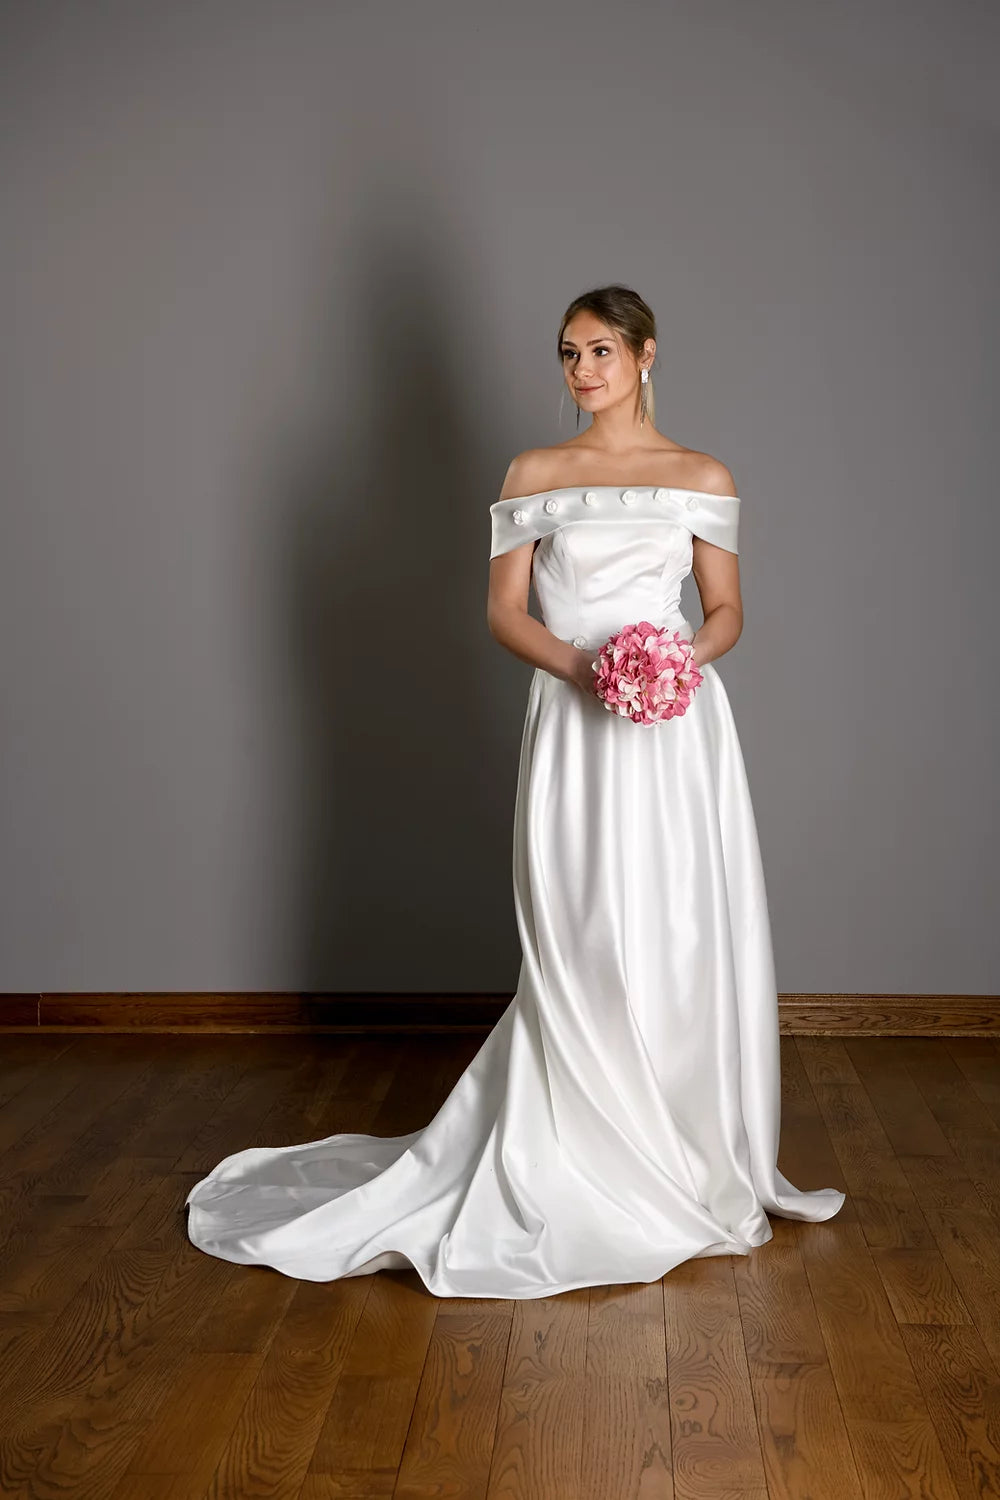 Flowered Wedding Dress